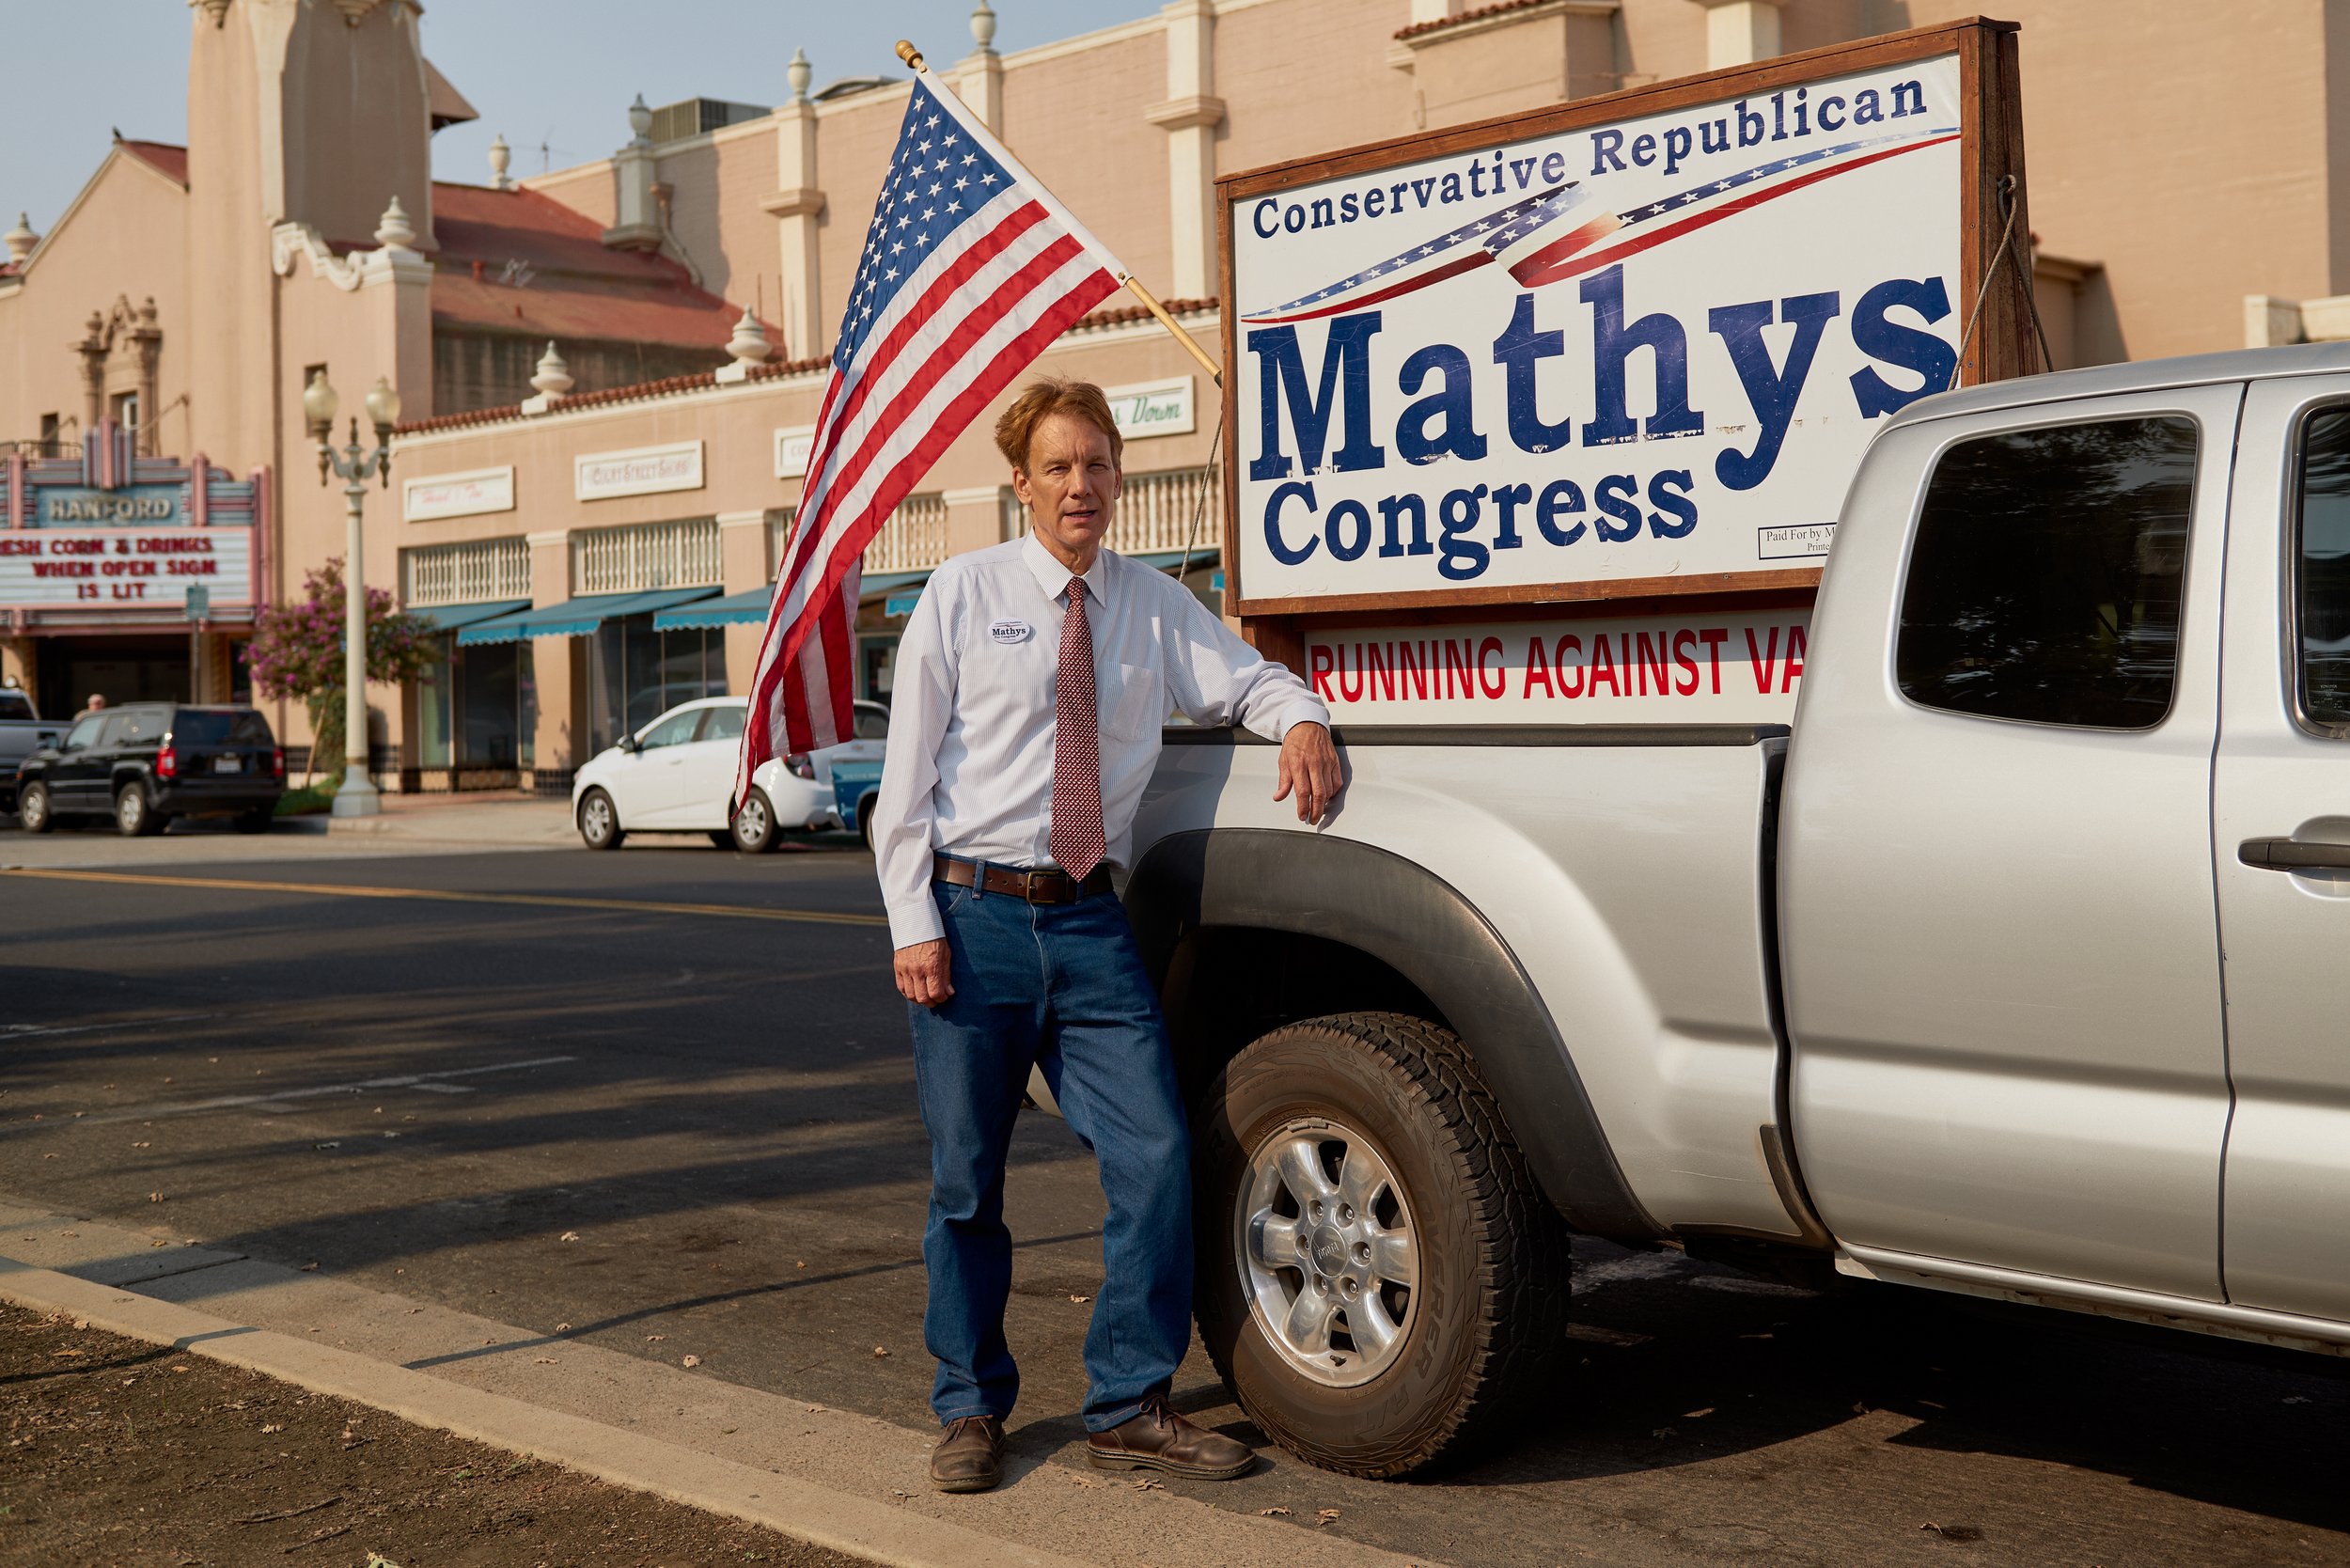 Chris Mathys, a Republican running against Rep. David Valadao